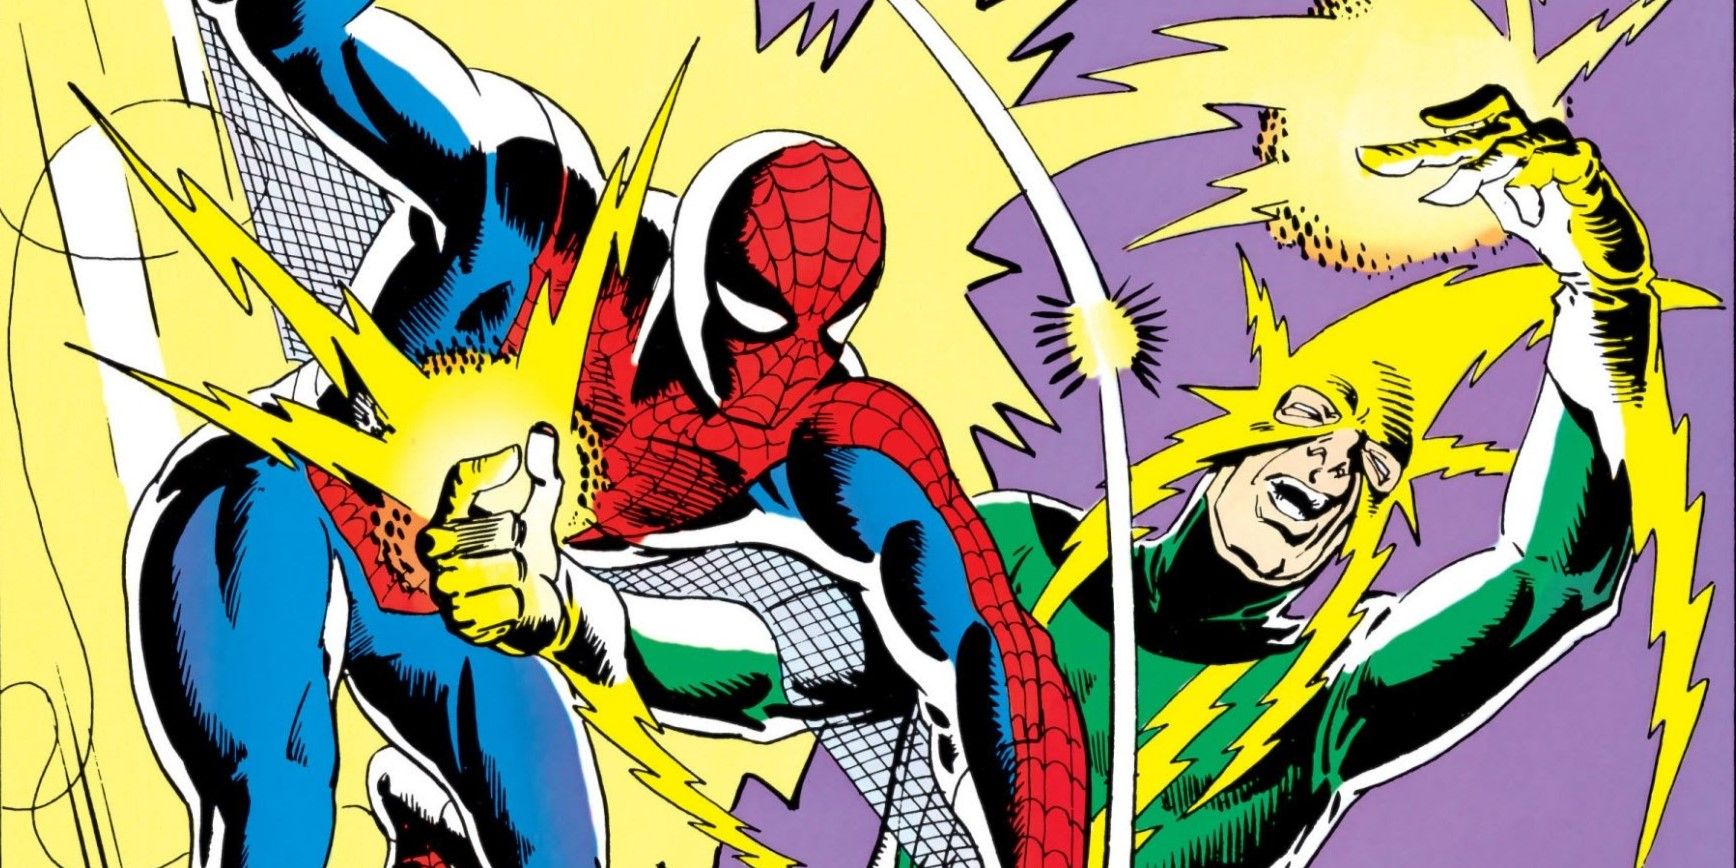 Spider-Man vs Electro Spider-Man annual